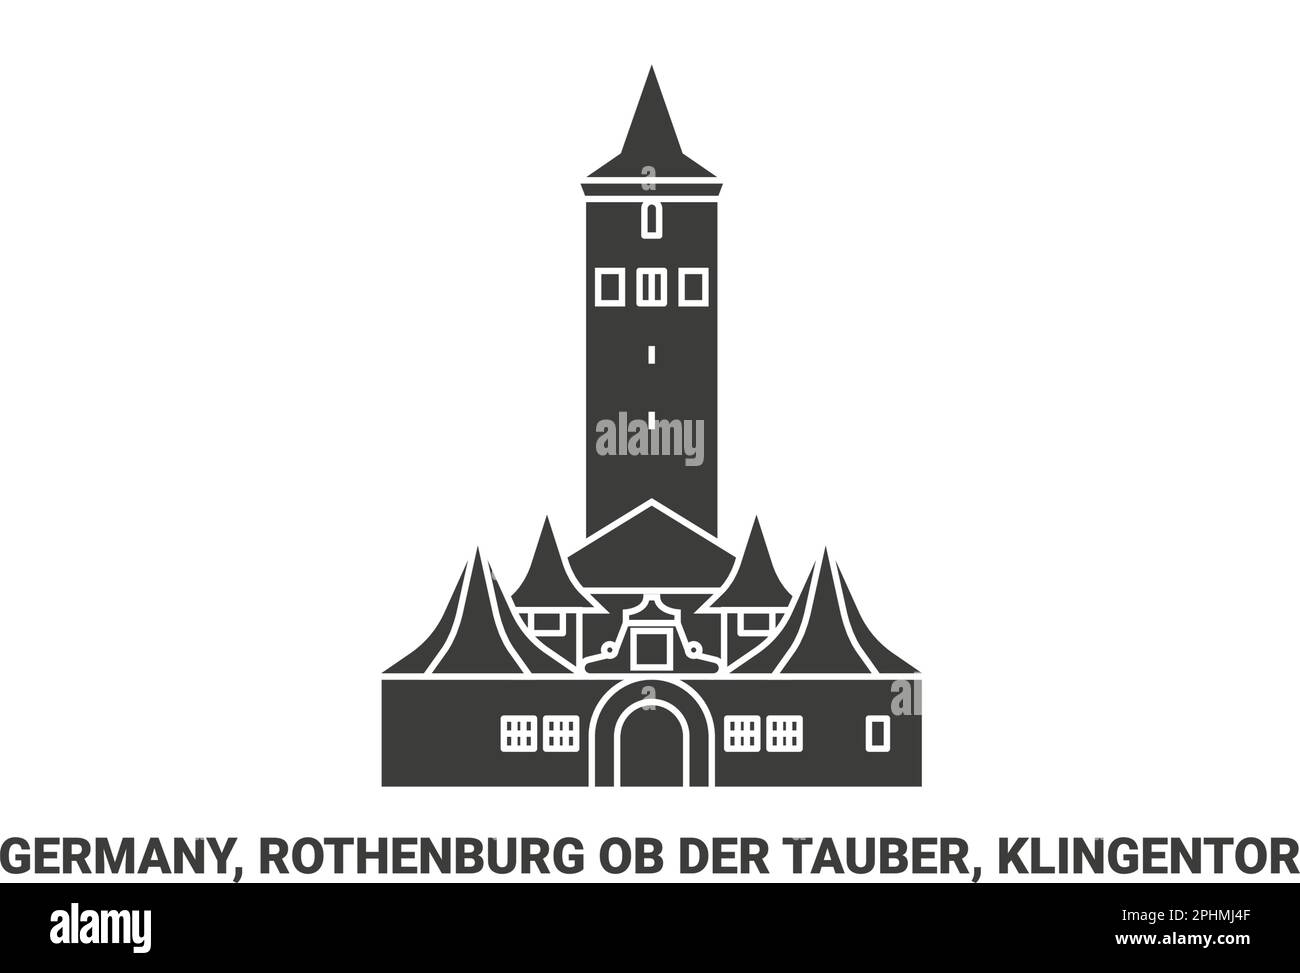 Germany, Rothenburg Ob Der Tauber, Klingentor travel landmark vector illustration Stock Vector